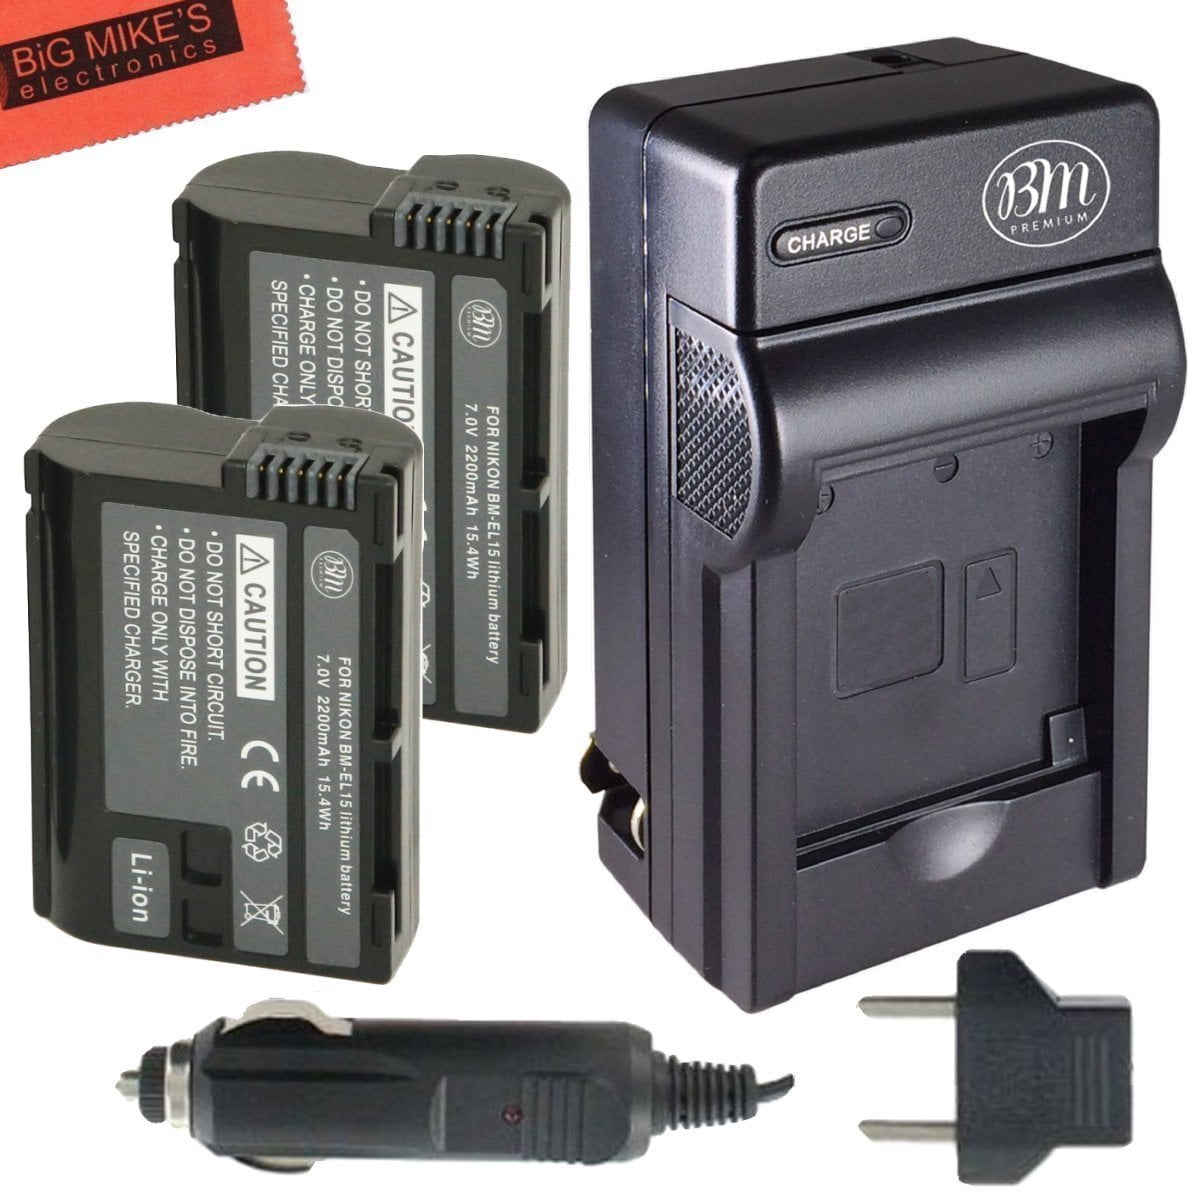 Includes Qty 2 BM Premium EN-EL15 Batteries Rapid AC/Dc Battery Charger Vertical Battery Grip High Power Battery Grip Kit for Nikon D7500 Digital SLR Camera 